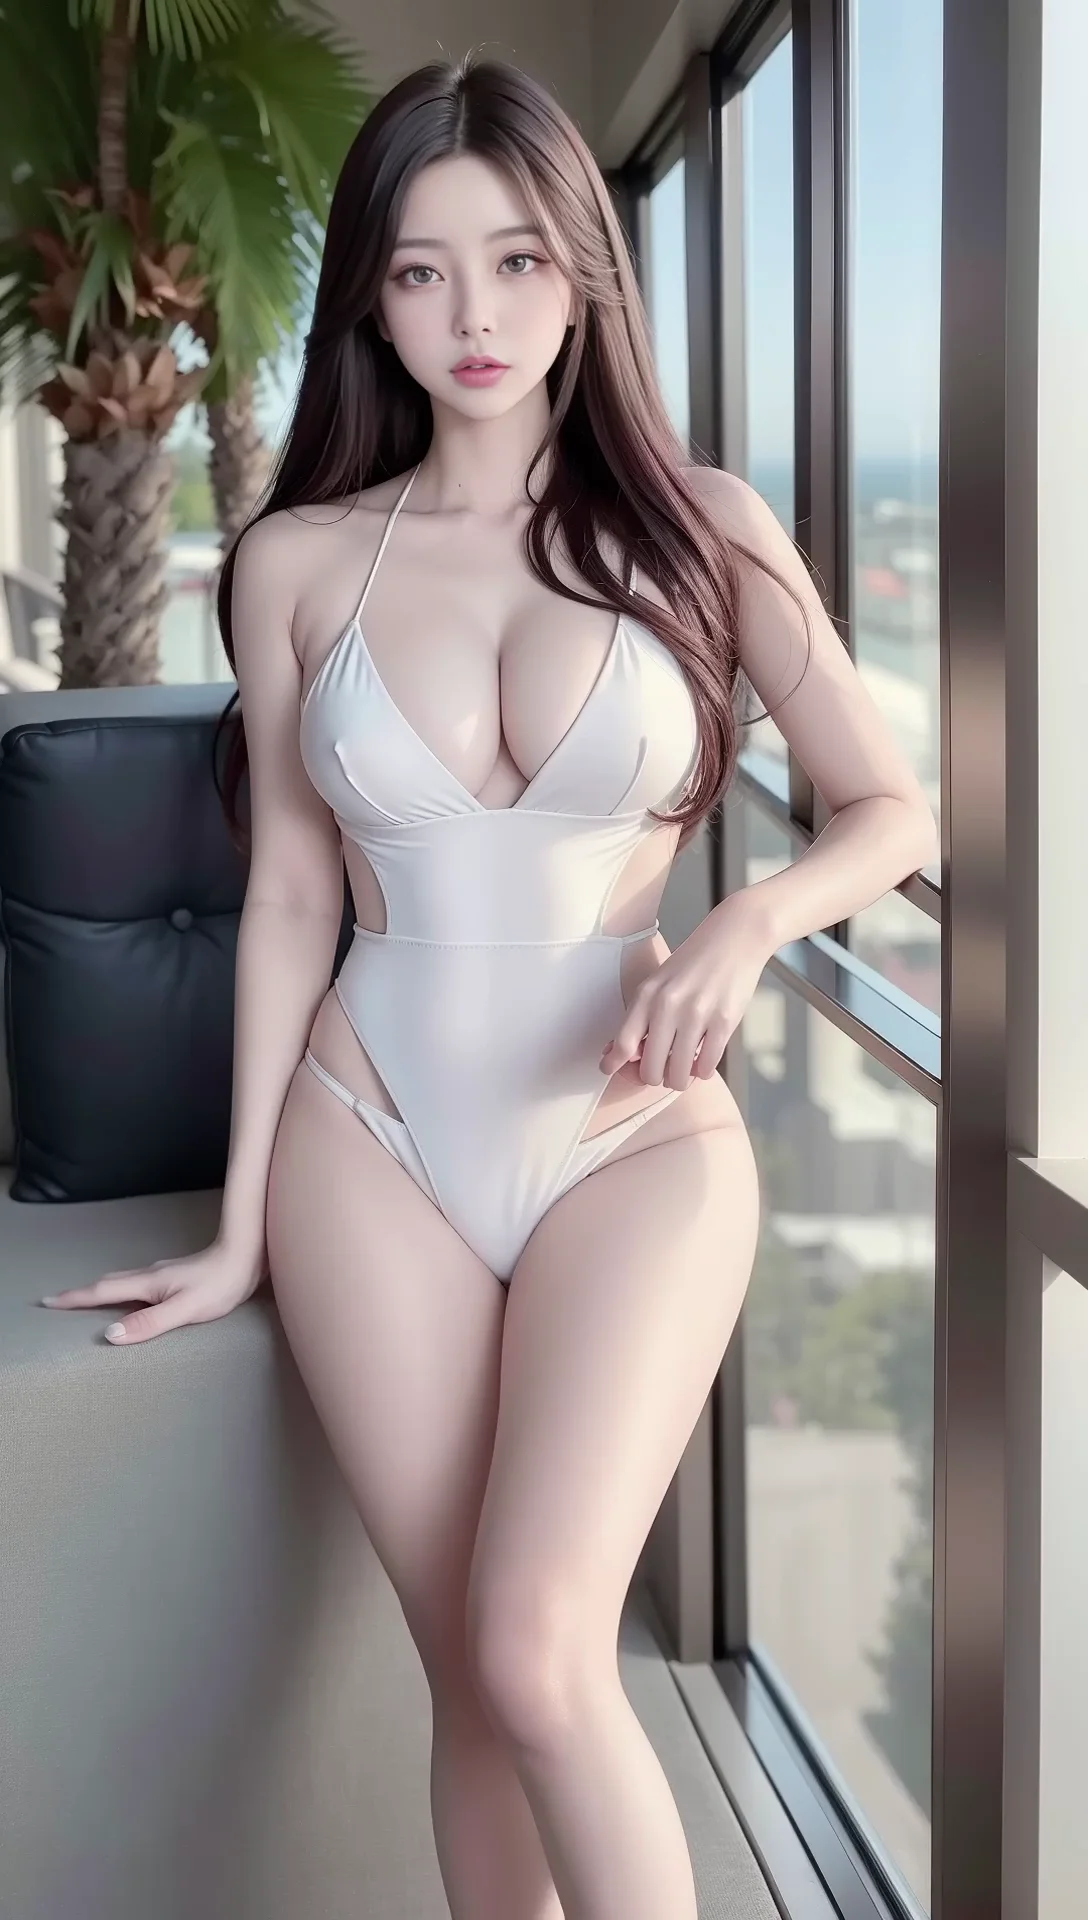 Ai Art Lookbook: Sexy Girl Swimsuit on the Resort Terrace Image 07